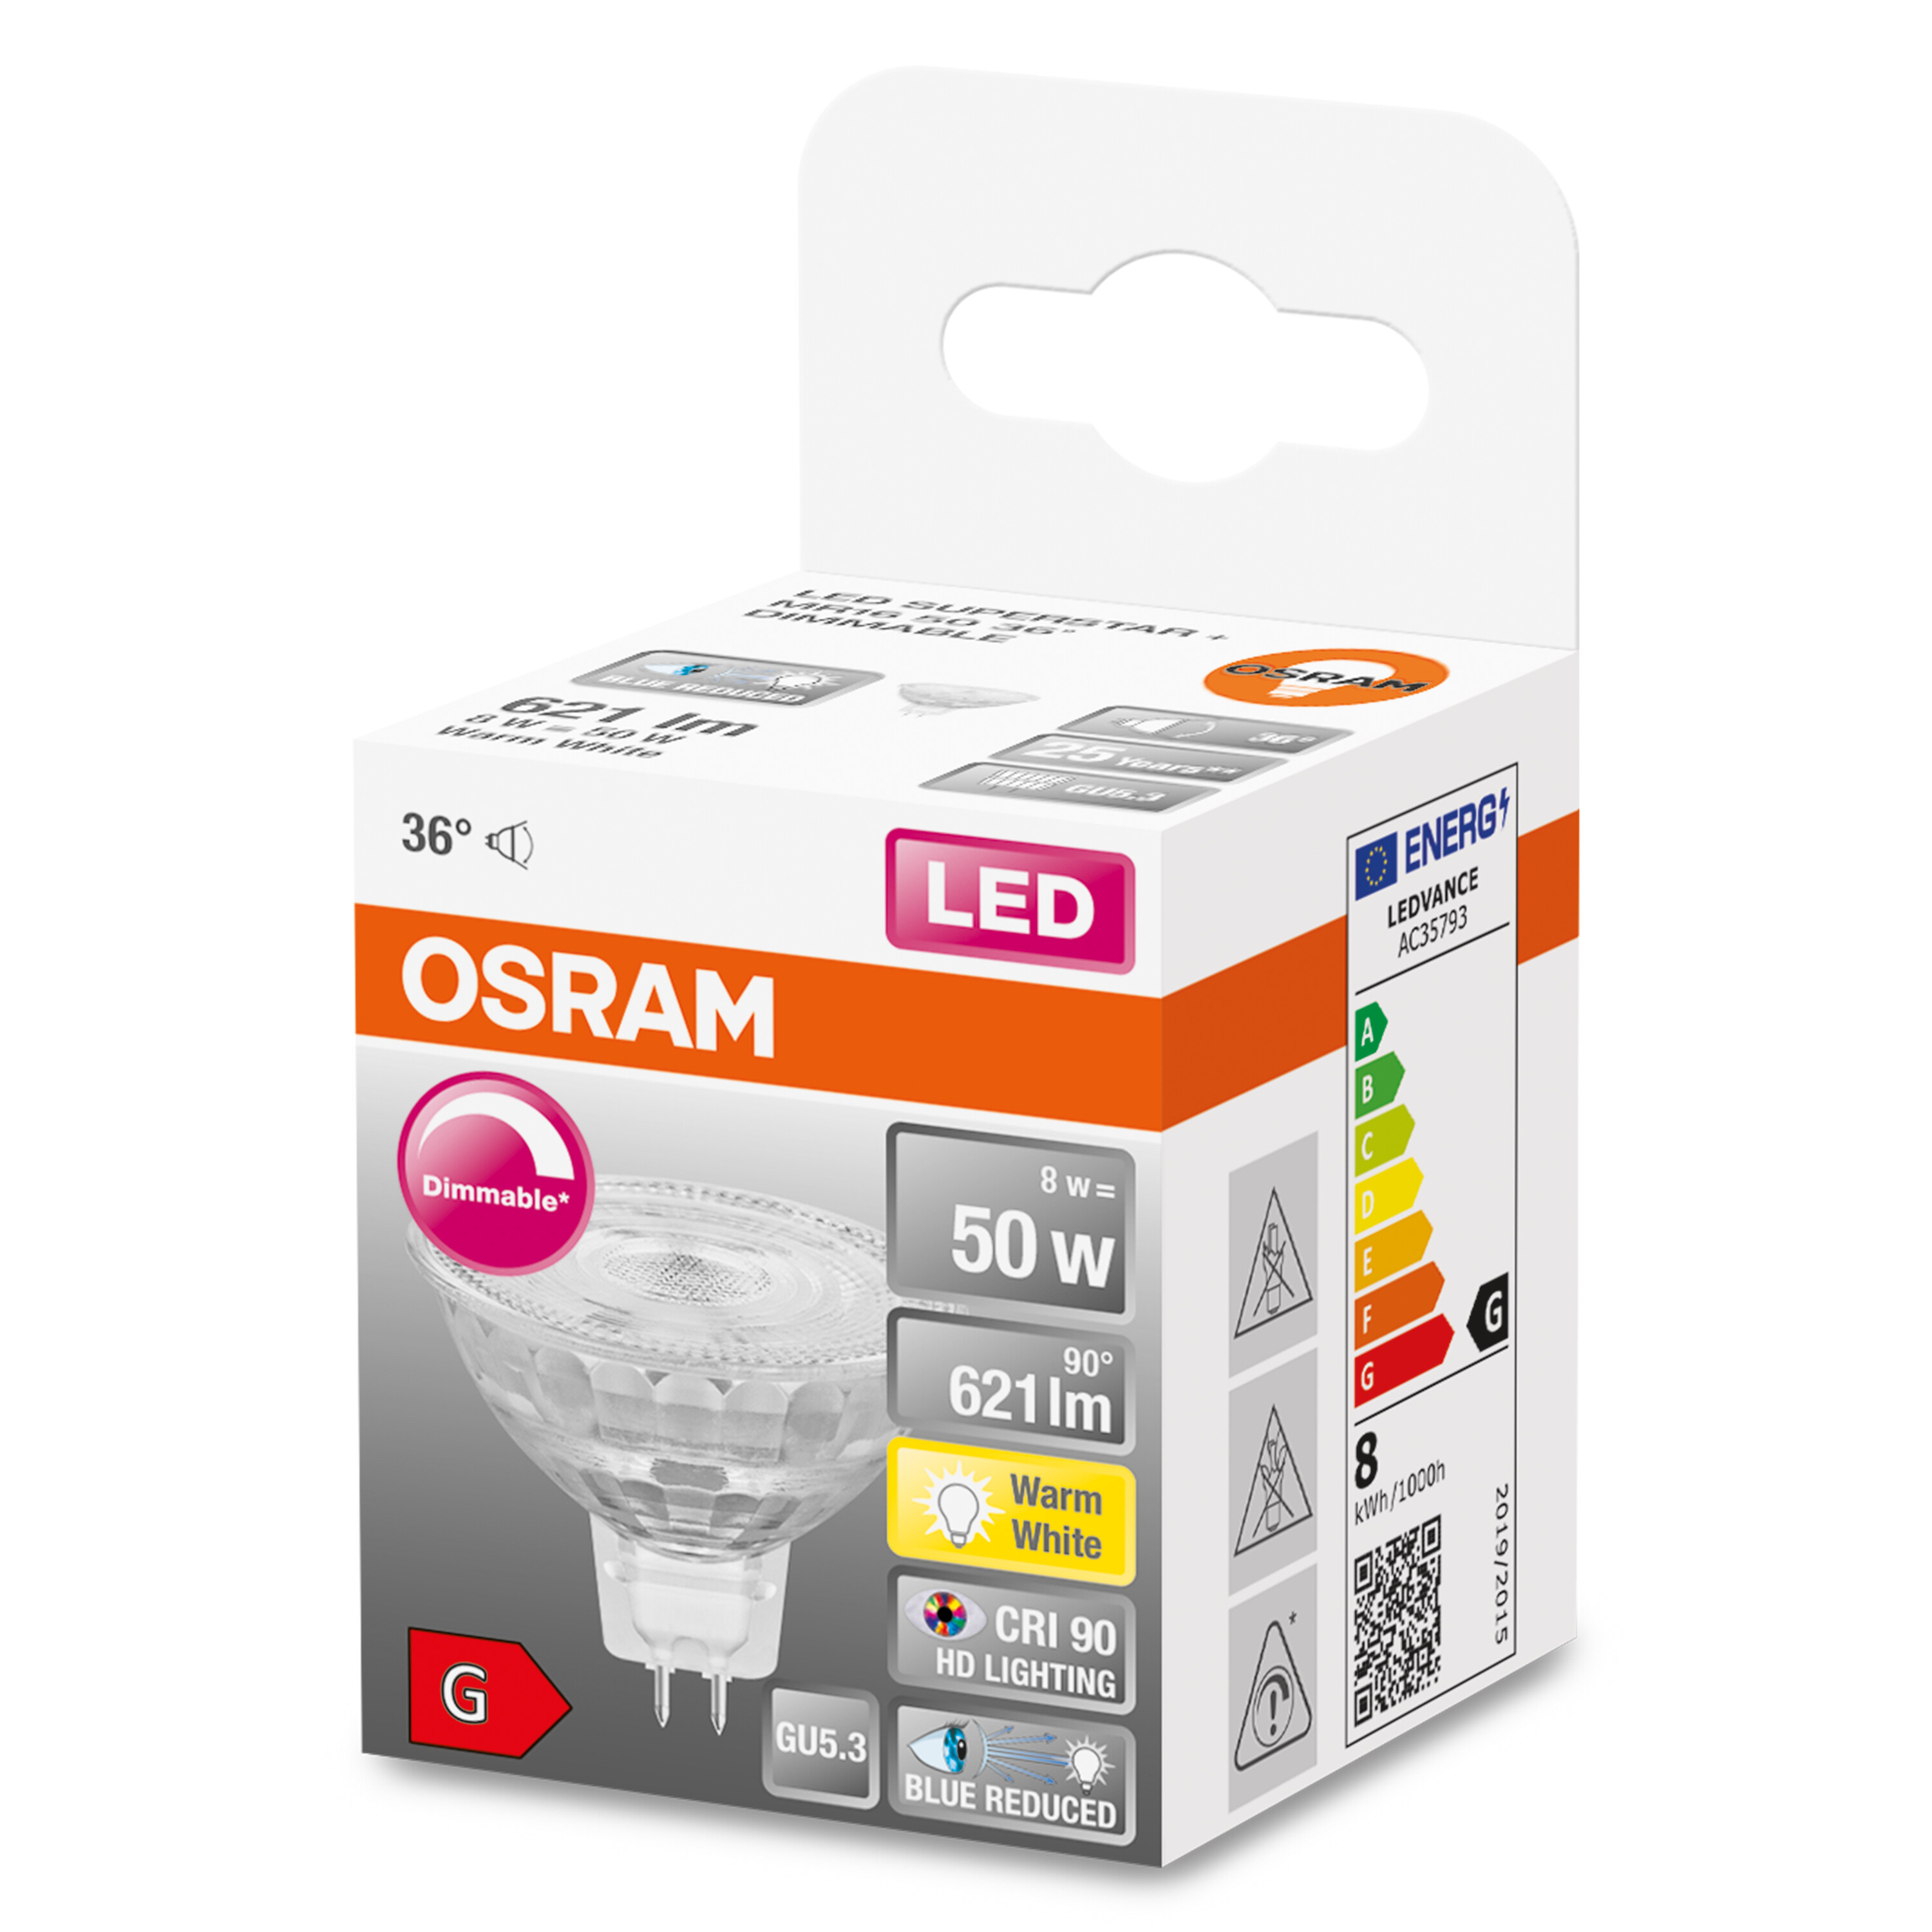 PLUS Lumen Warmweiß OSRAM  SUPERSTAR LED Reflektor-Lampe LED MR16 621